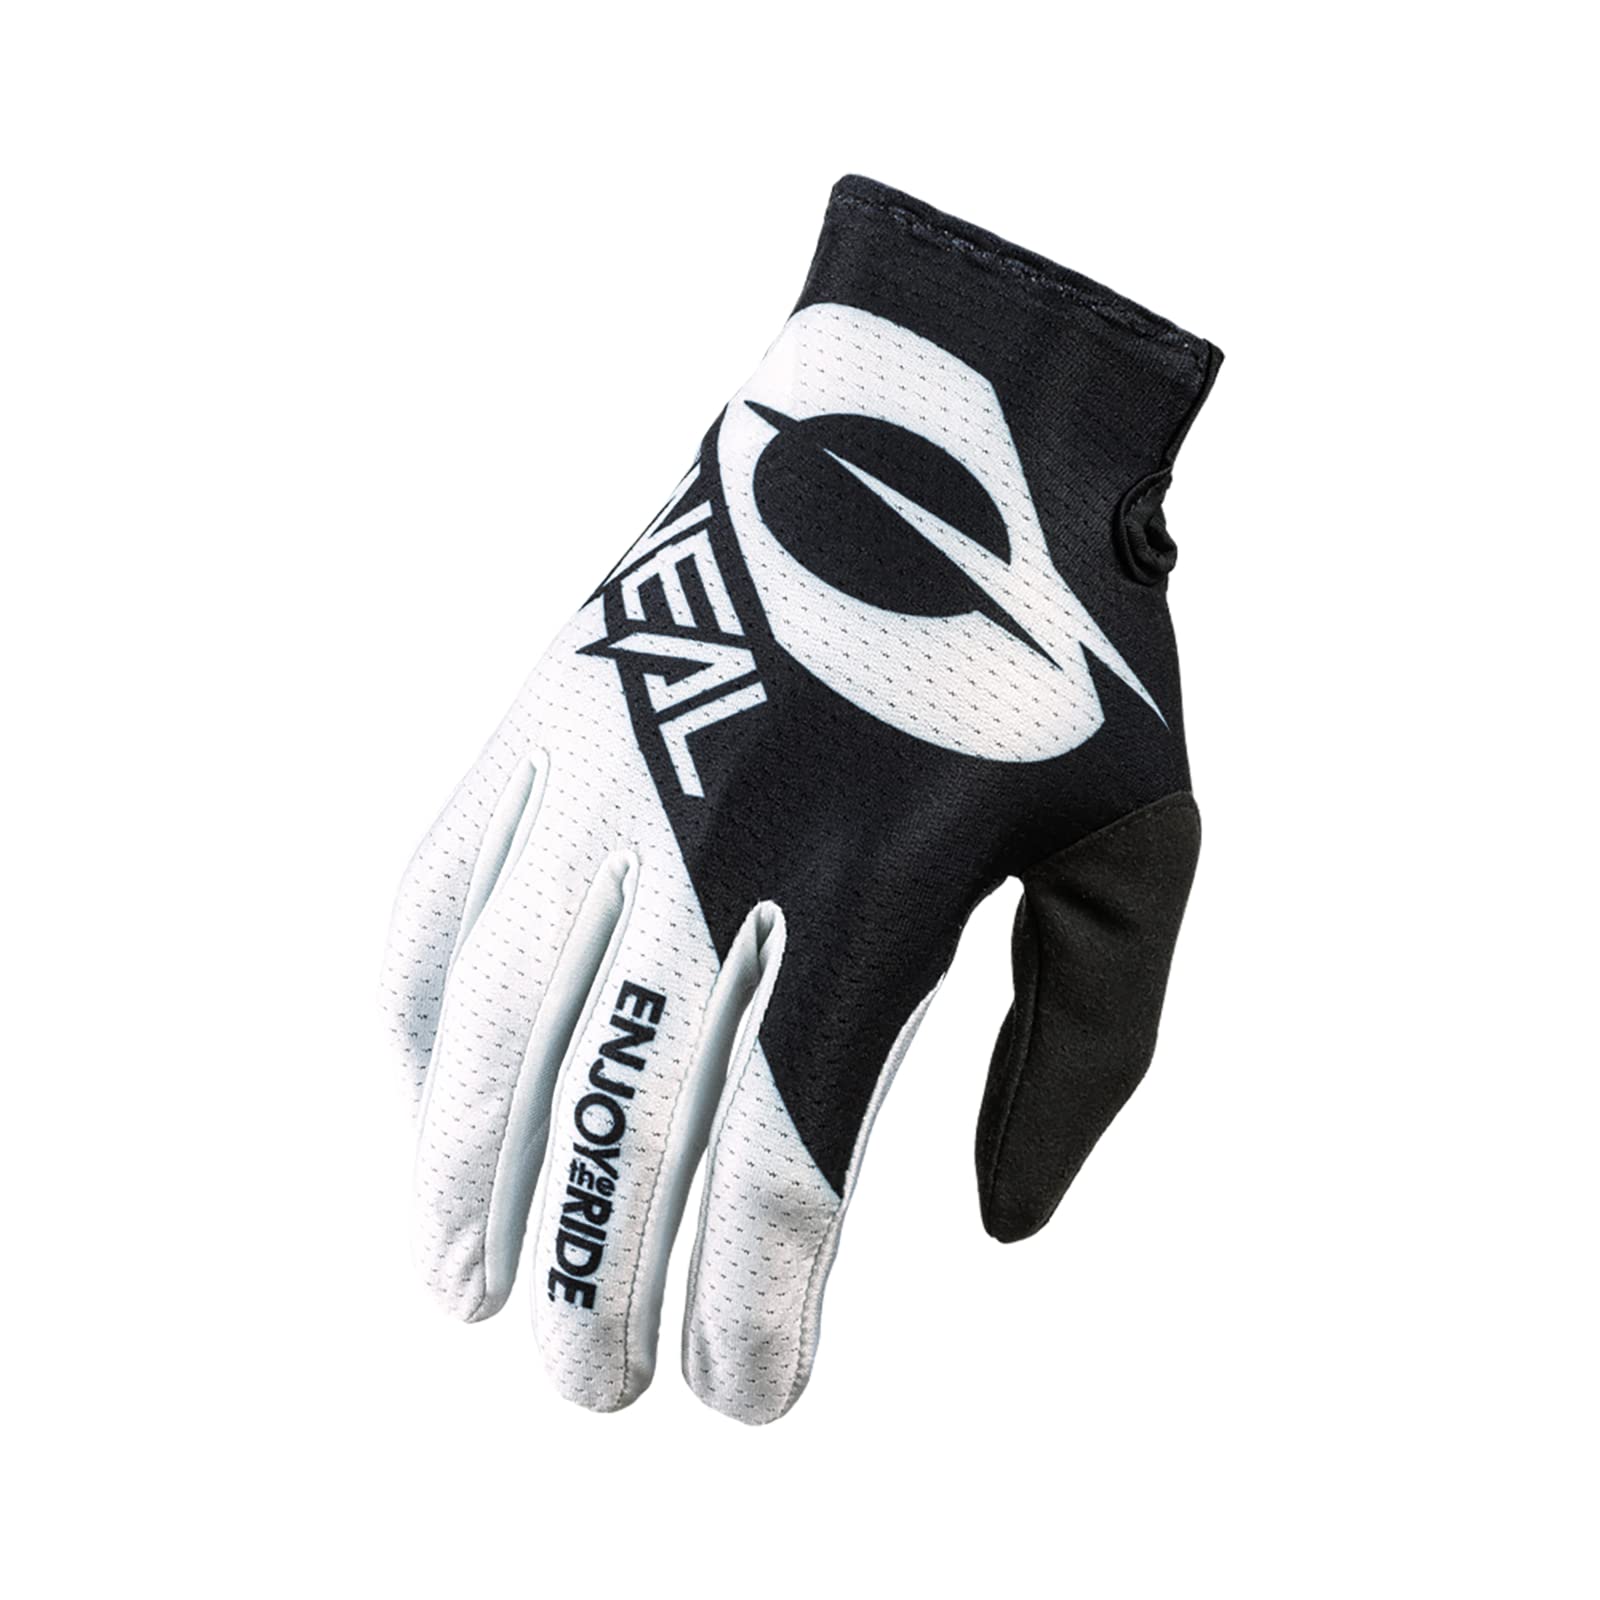 O'NEAL | Fahrrad- & Motocross-Handschuhe | MX MTB DH FR Downhill Freeride | Langlebige, Flexible Materialien, belüftete Handoberseite | Matrix Glove | Erwachsene | Schwarz Weiß | Größe XL von O'NEAL